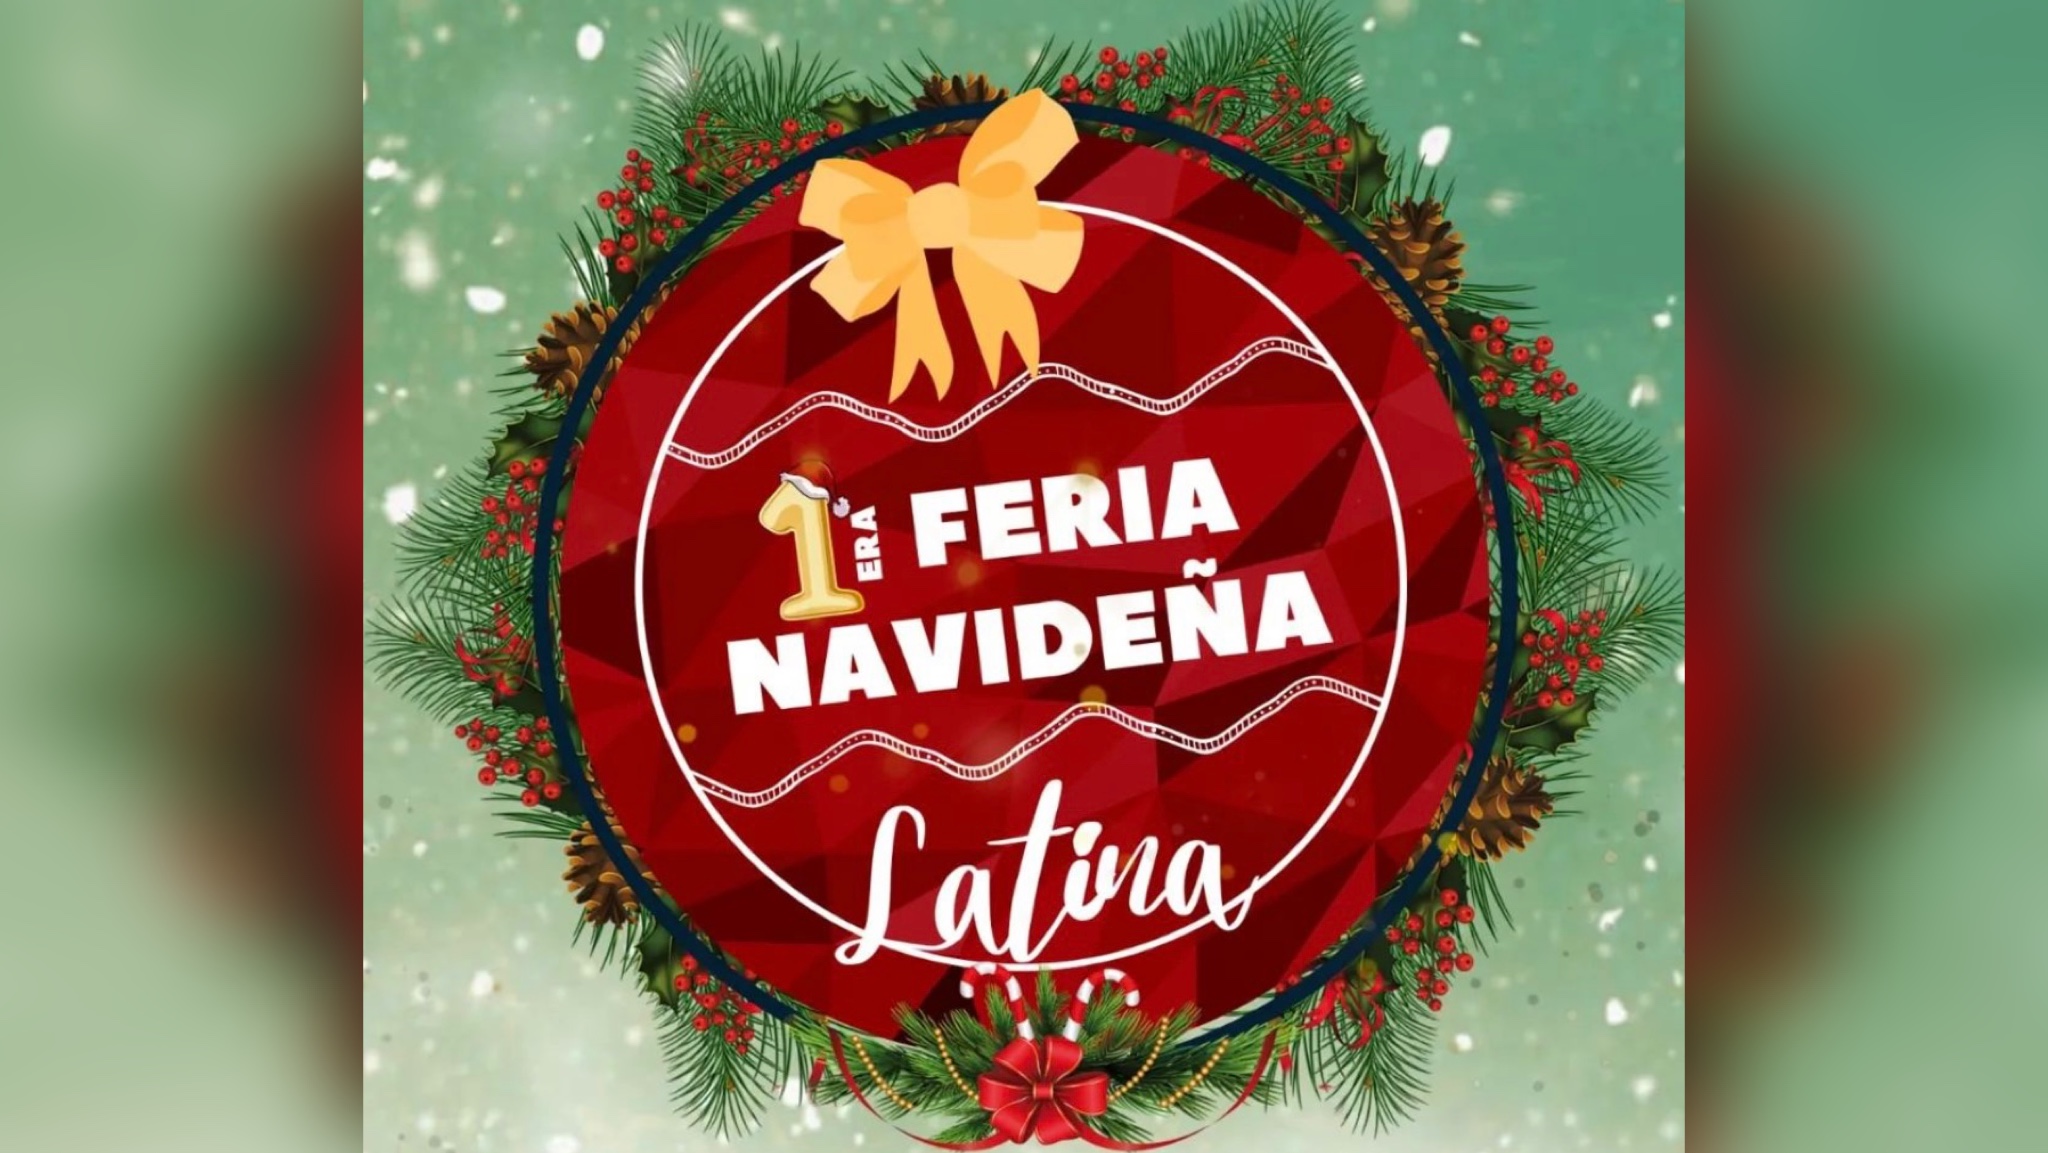 Jacksonville tendrá su "1era Feria Navideña Latina" Hola News